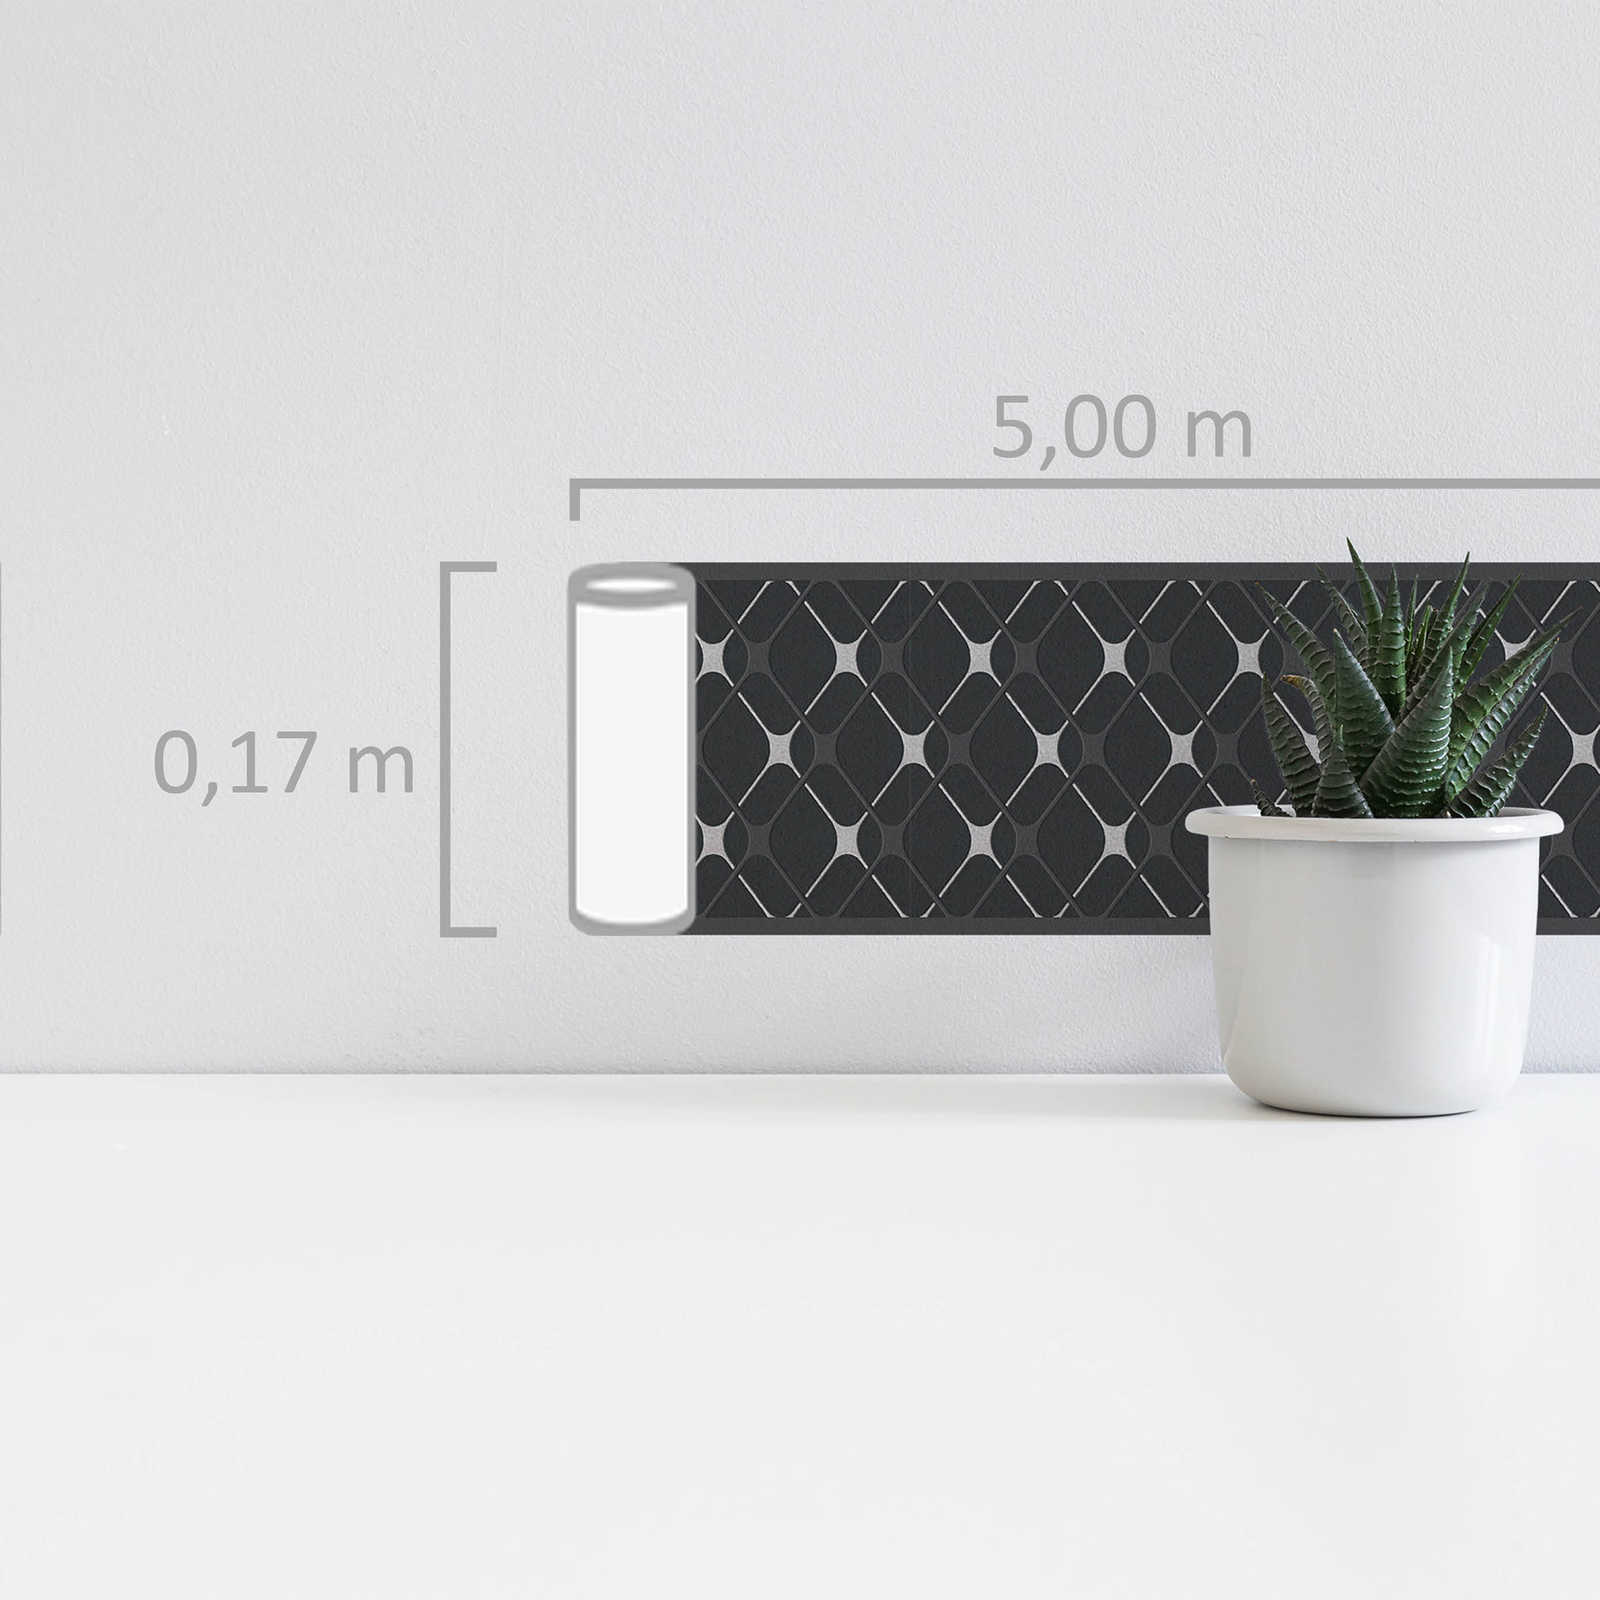             Self-adhesive wallpaper border with diamond pattern - black, white
        